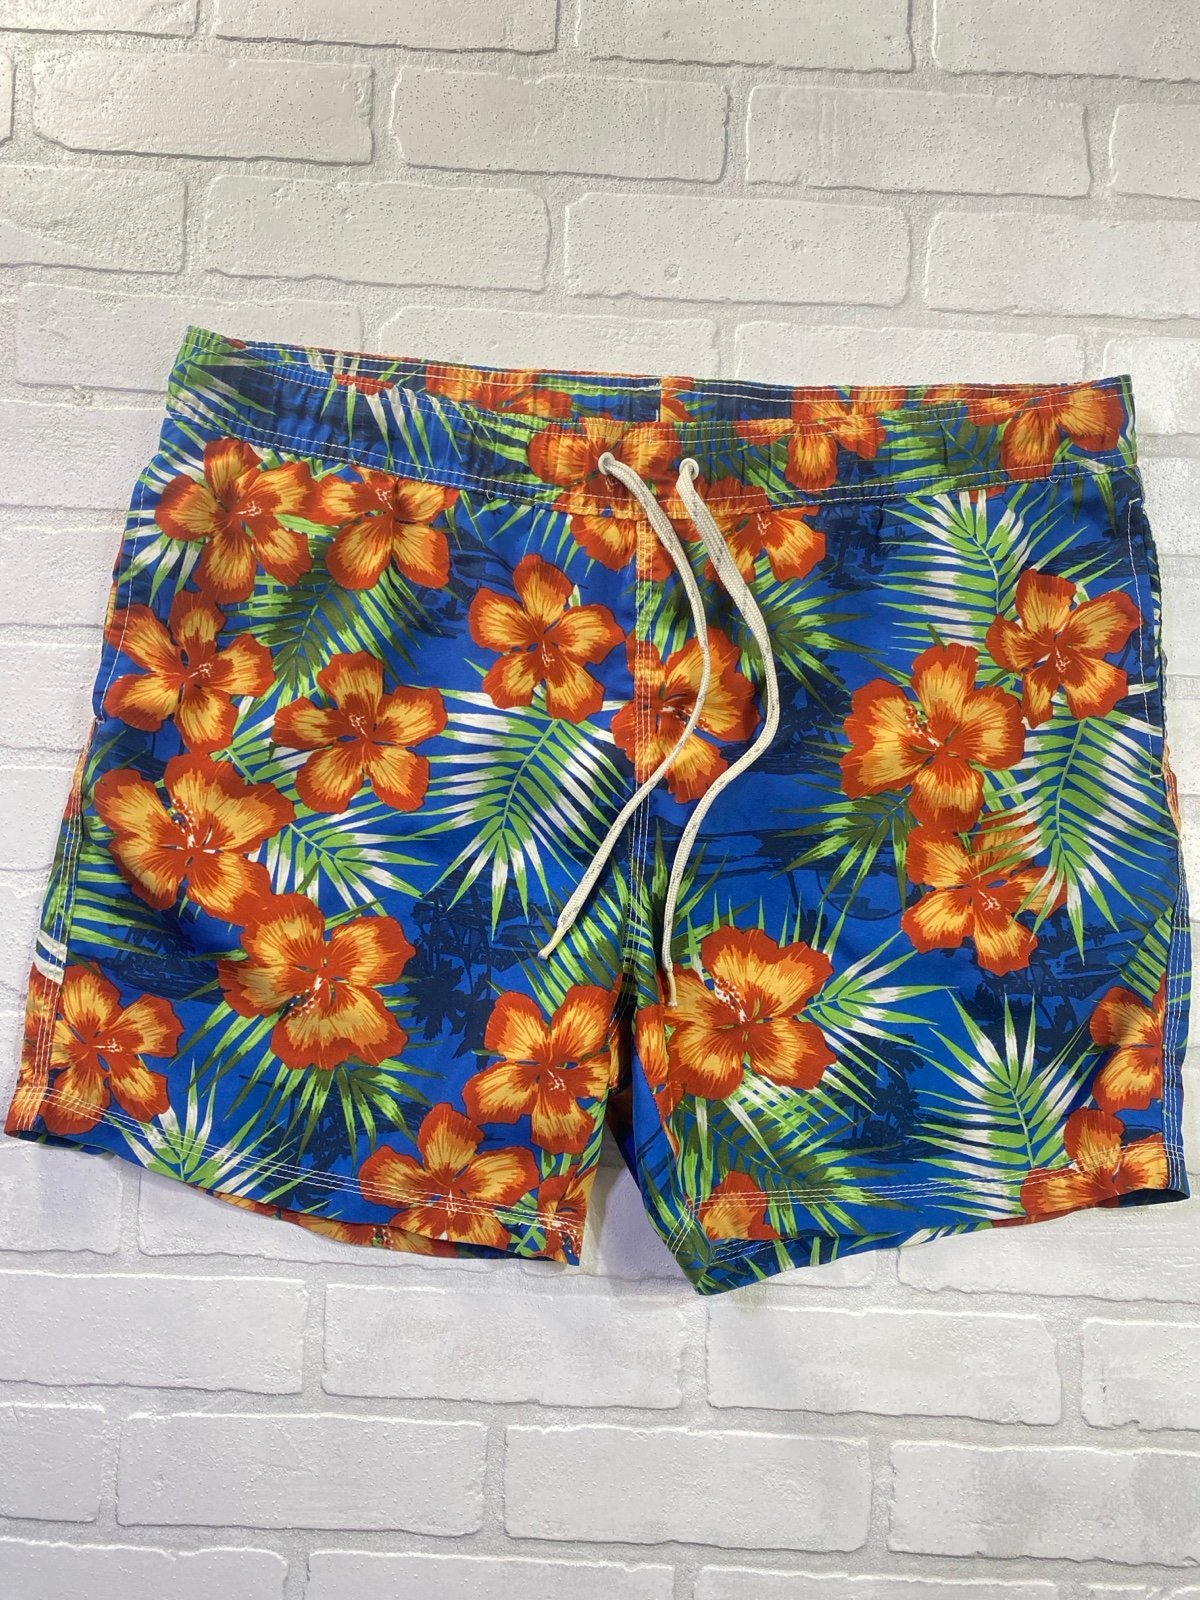 Men’s Caribbean Joe Size XXL Floral Print Lined Swim Trunks VGUC AT9qrV28q